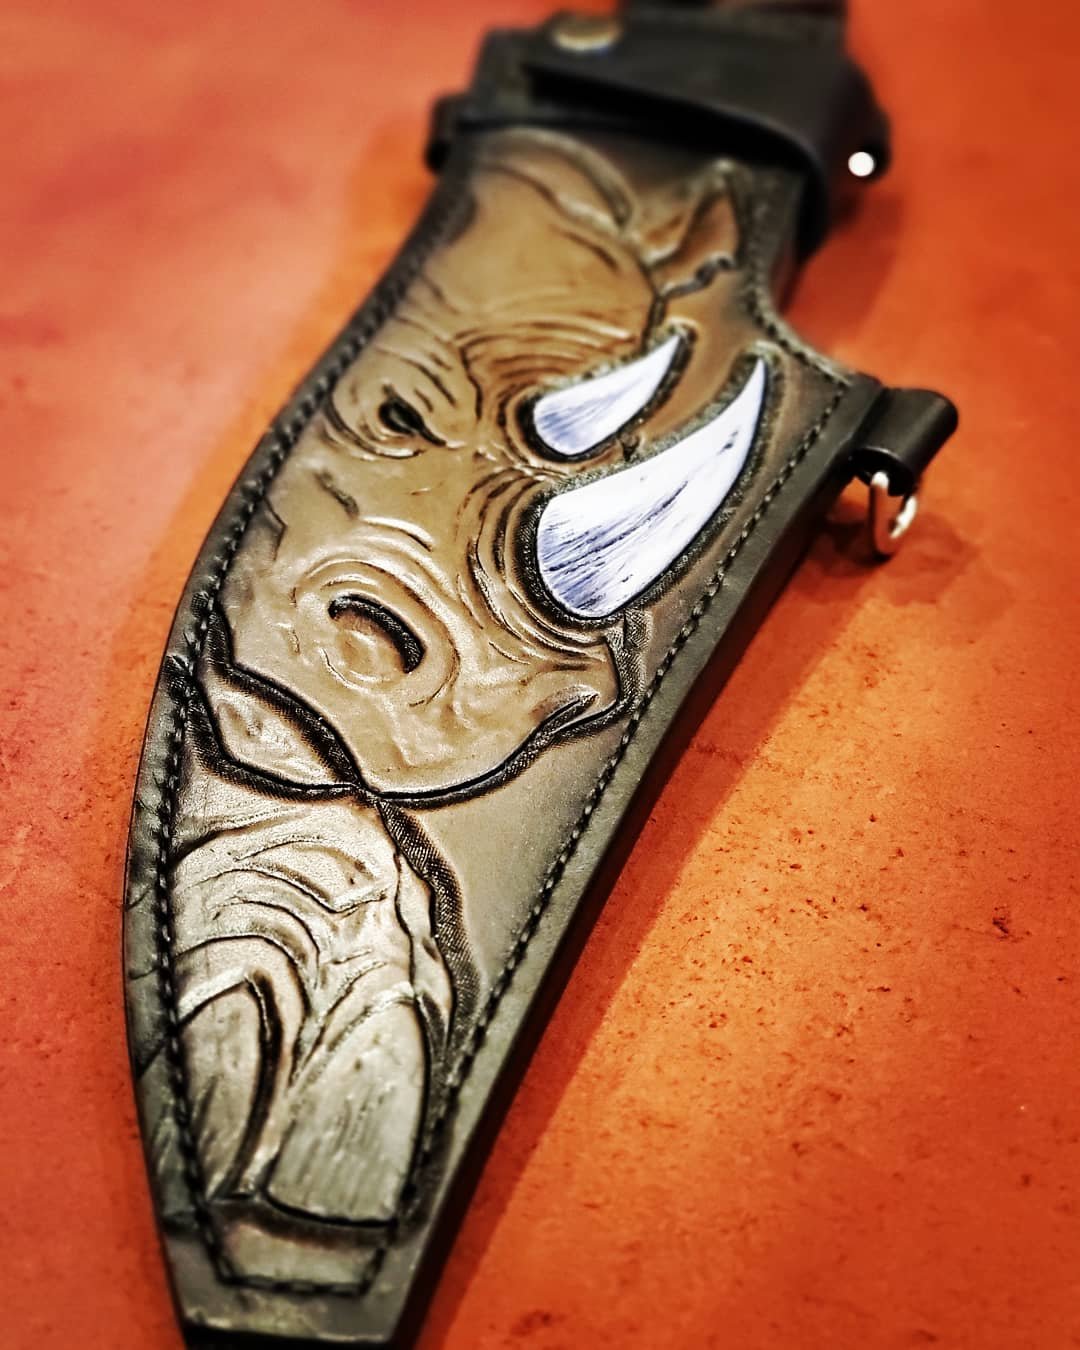 new sheath for custom knife. : r/Leathercraft